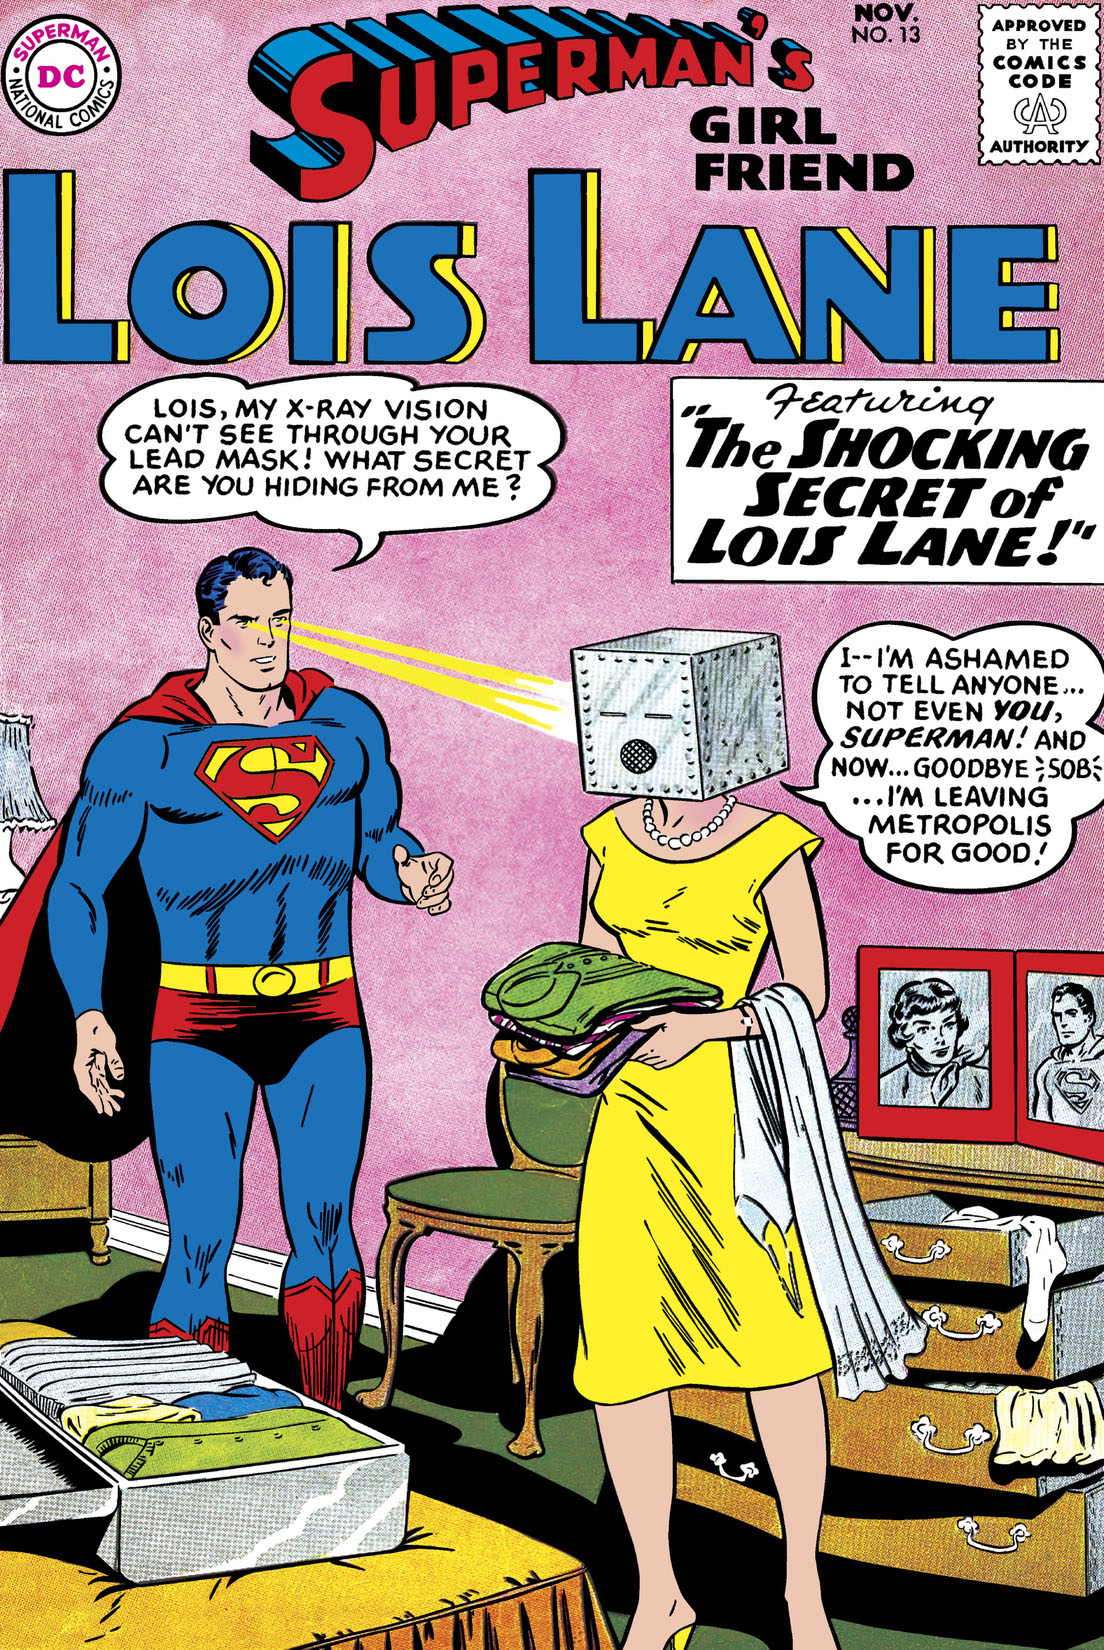 Superman's Girl Friend Lois Lane #13 preview images